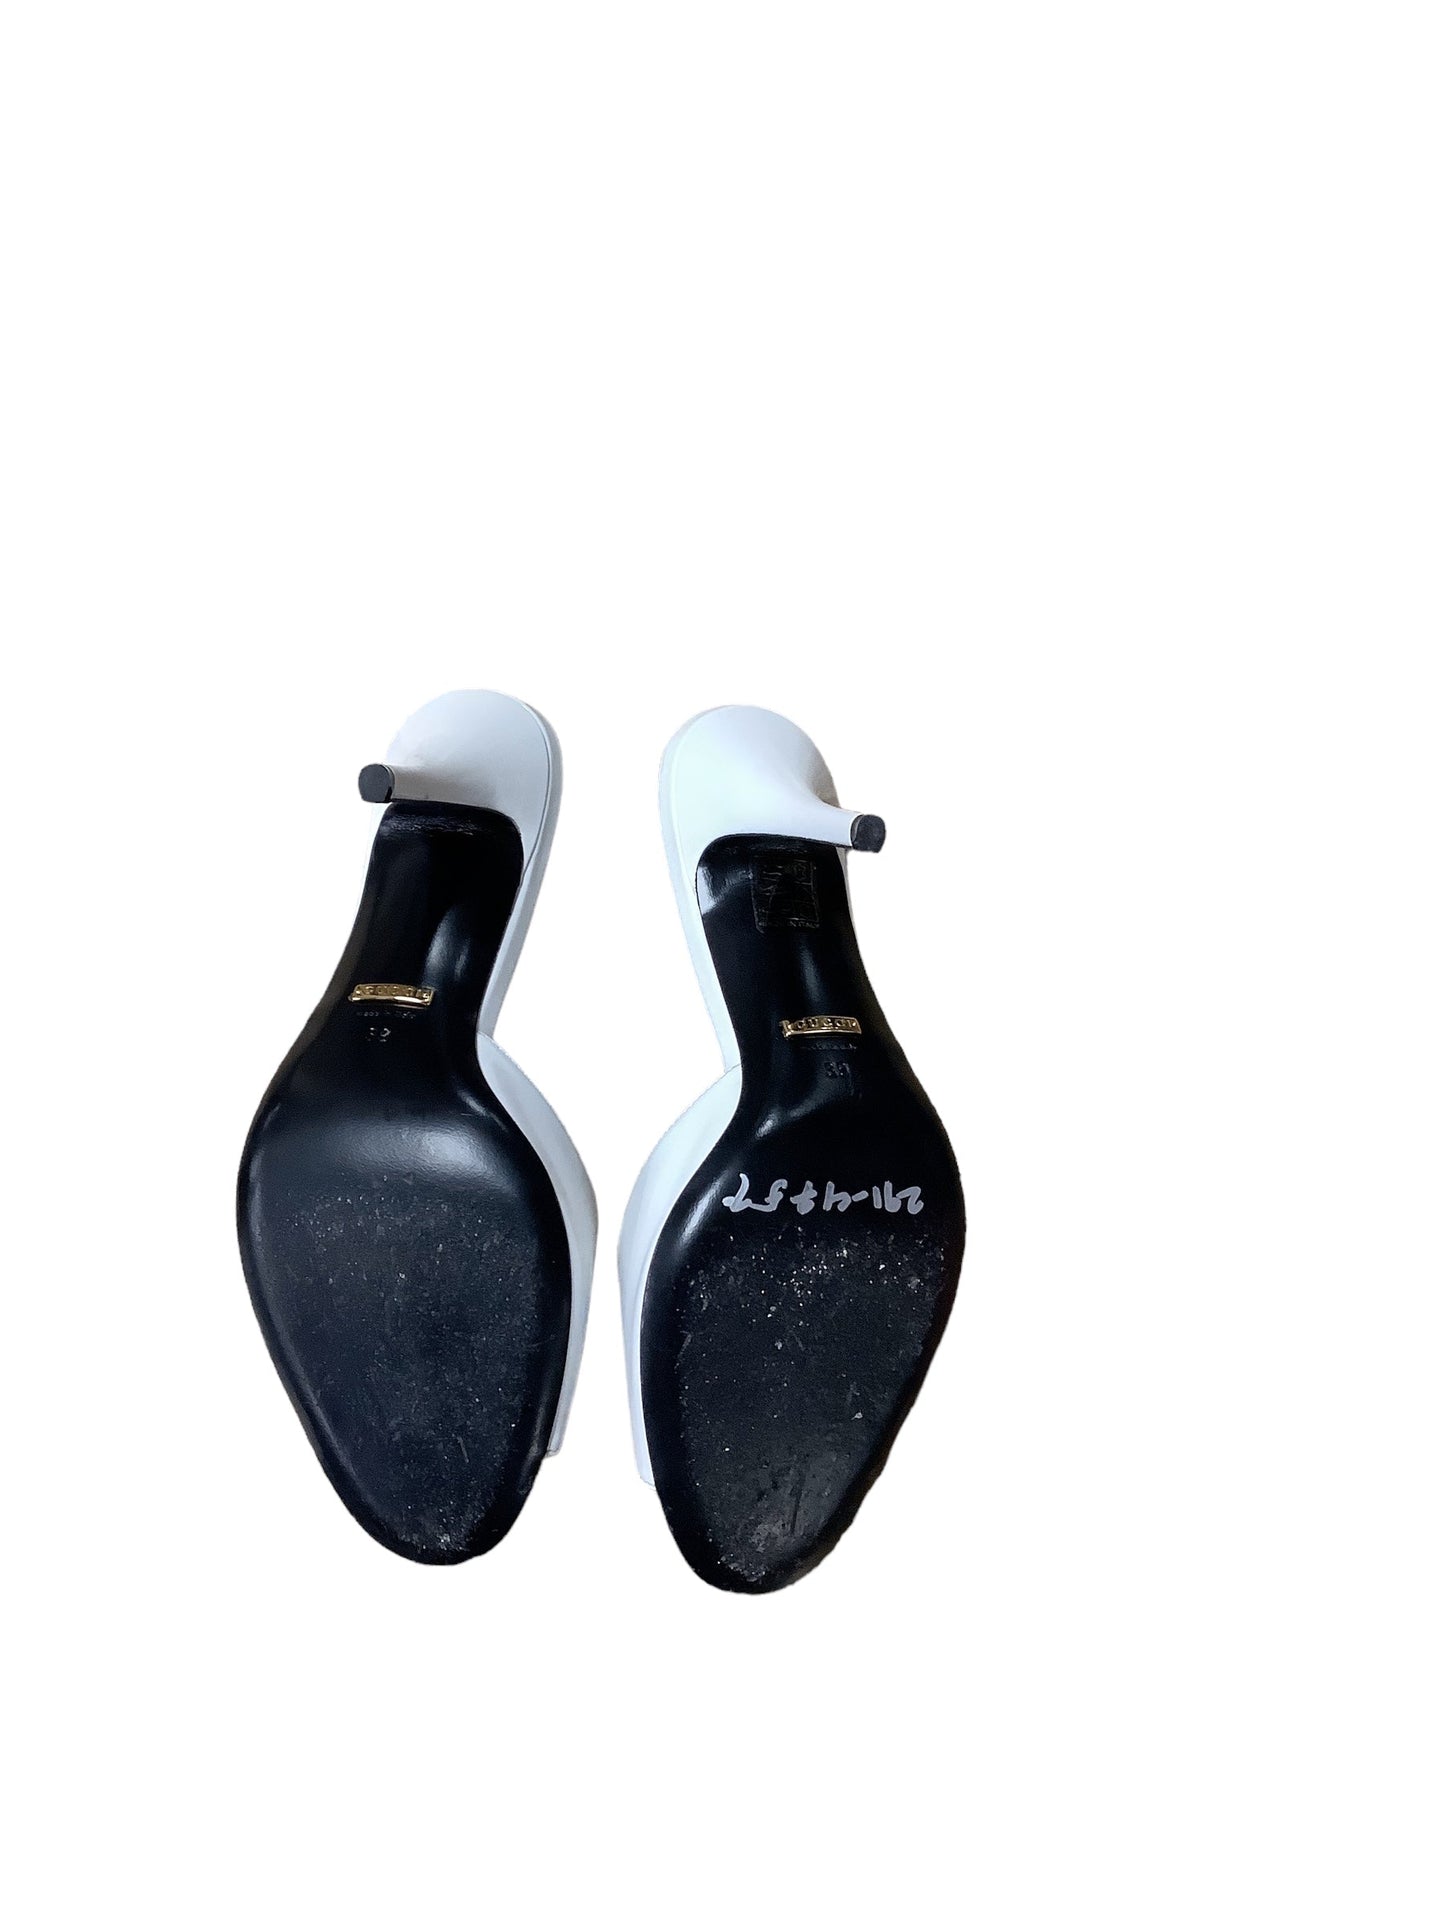 White Shoes Heels Stiletto Gucci, Size 9